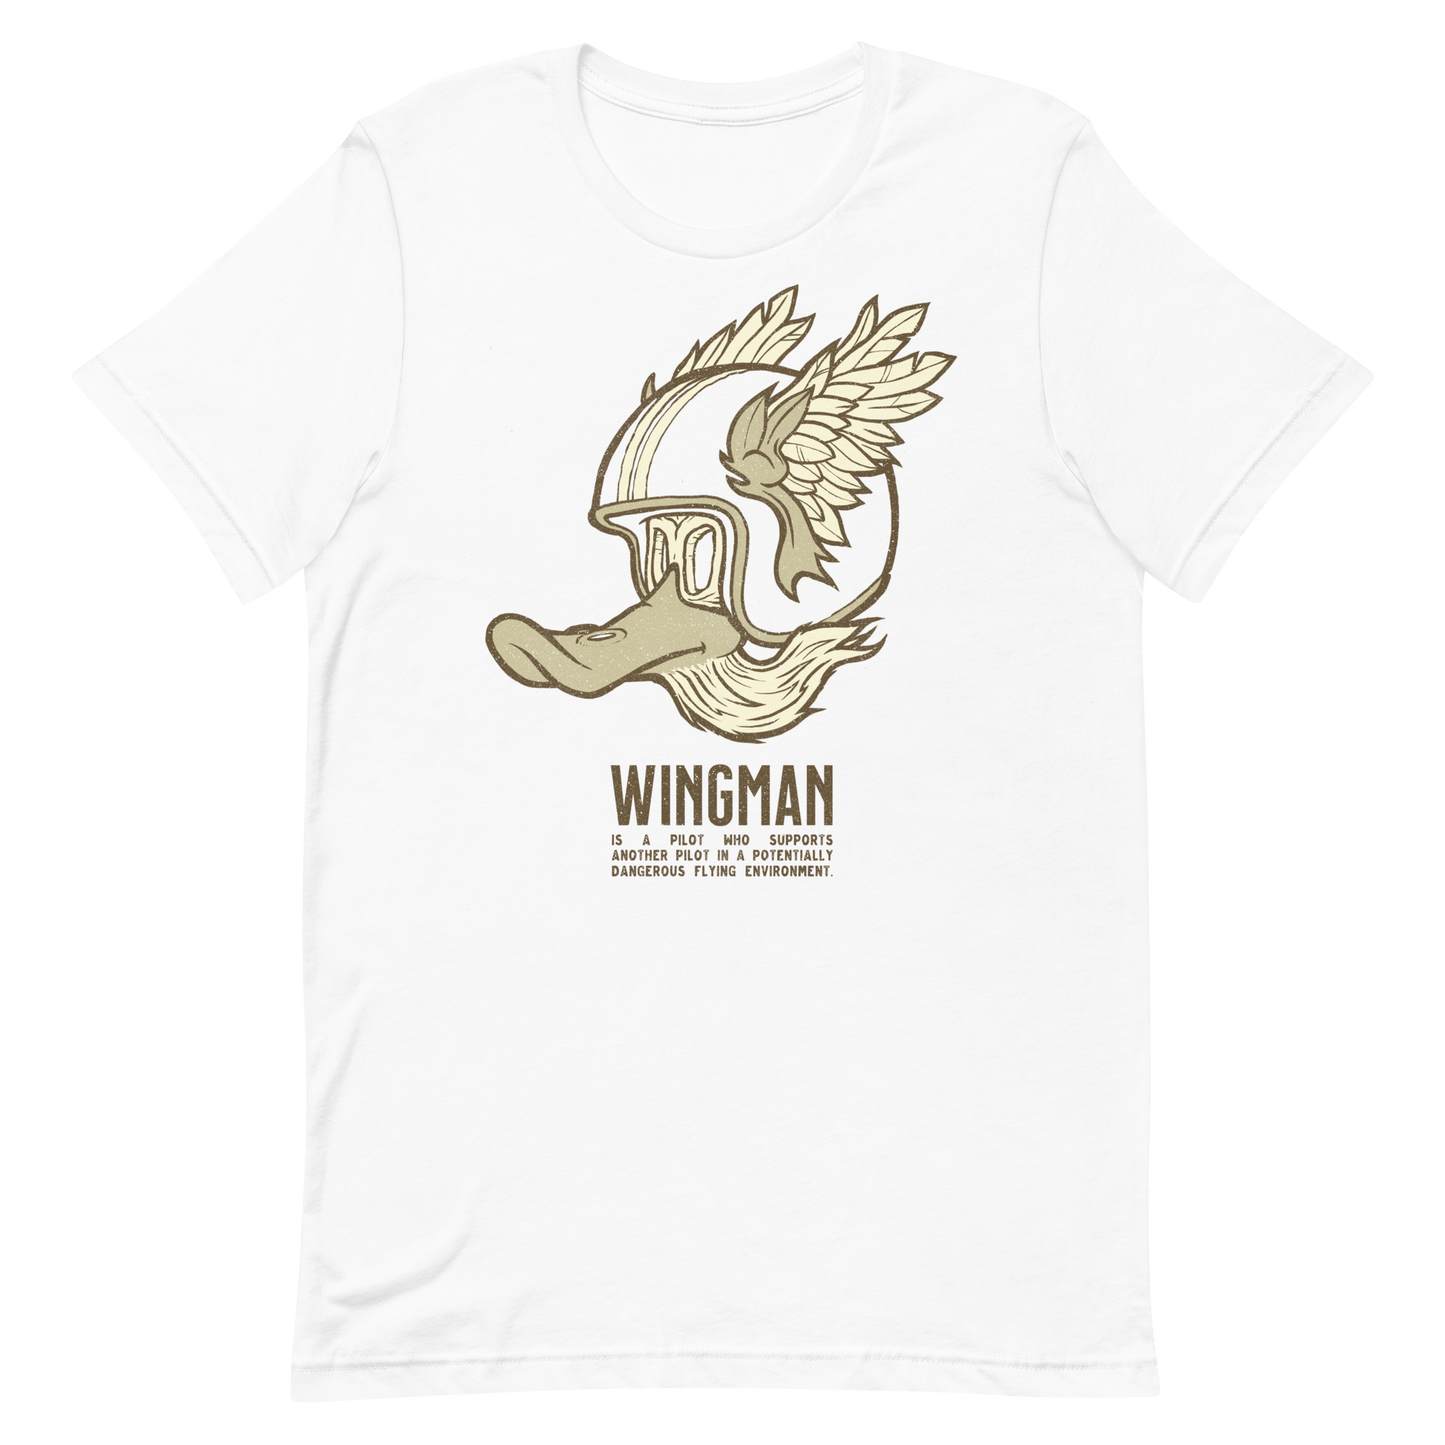 Wingman Motorcycle t-shirt